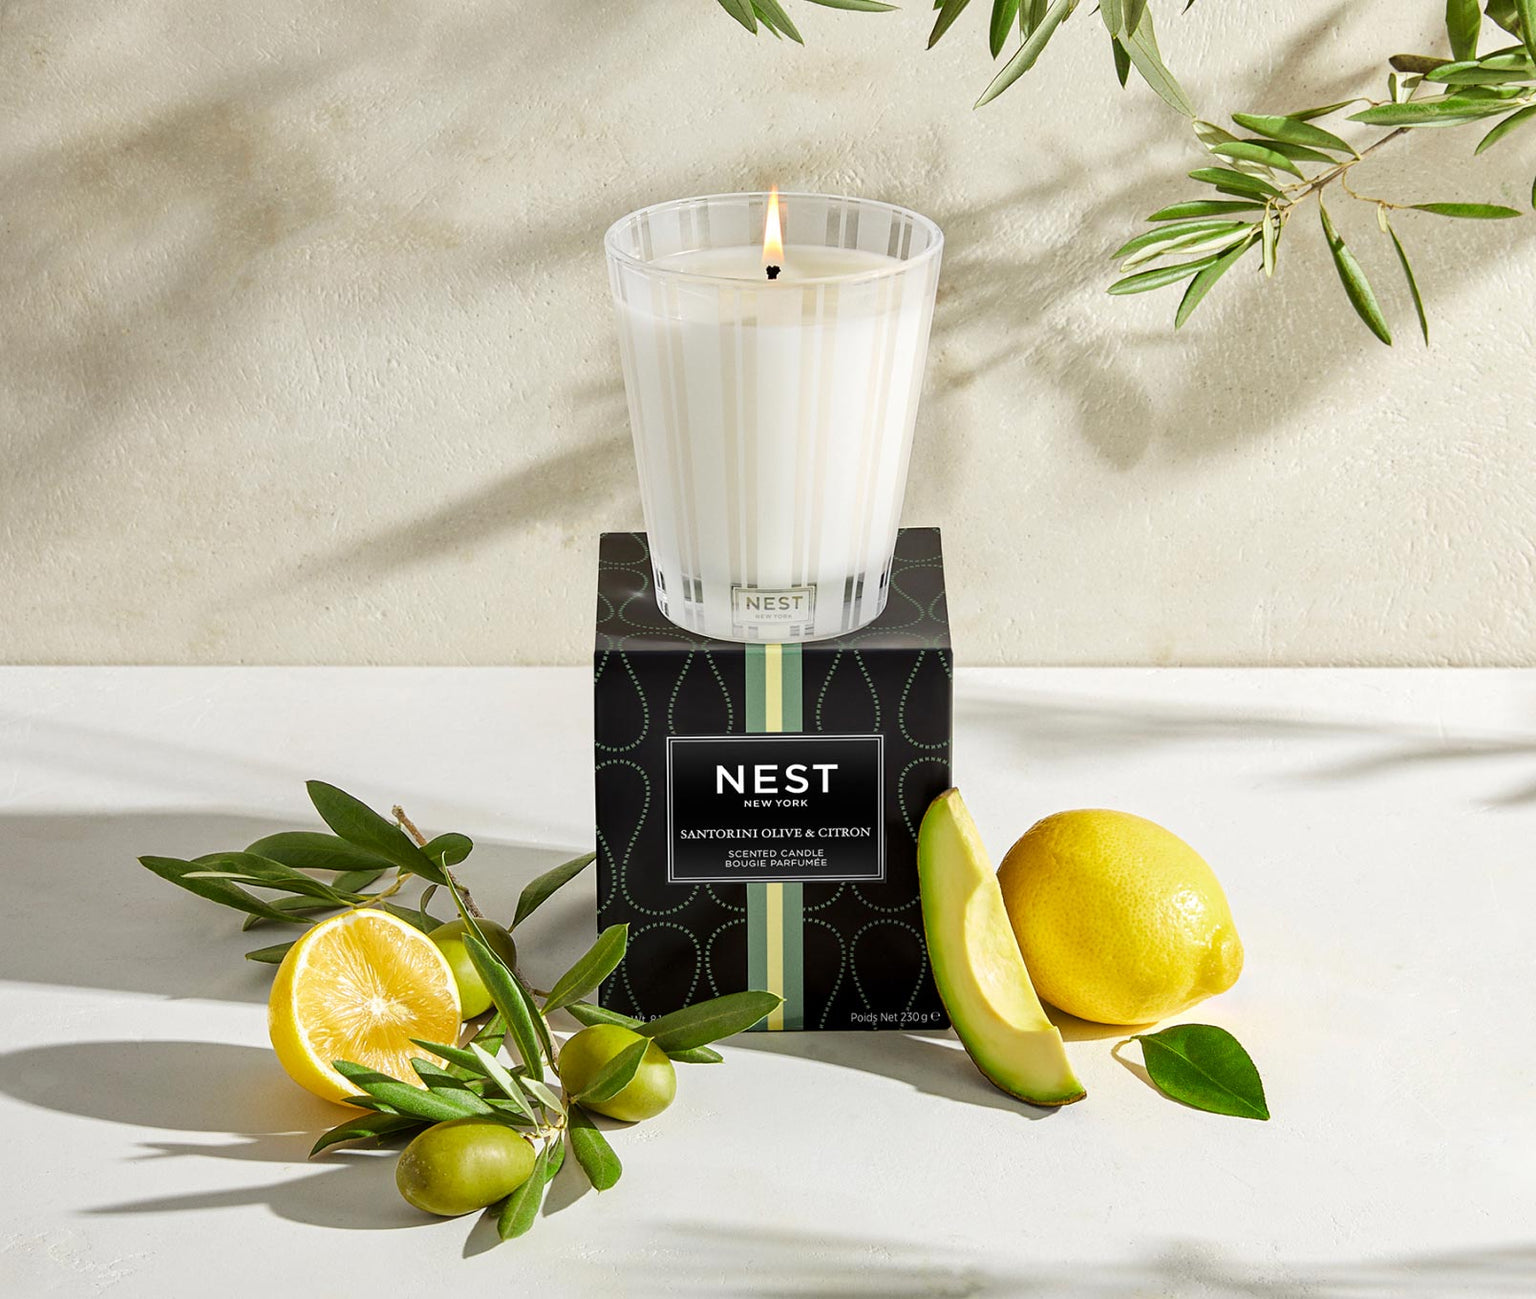 Nest Santorini Olive & Citron Classic Candle